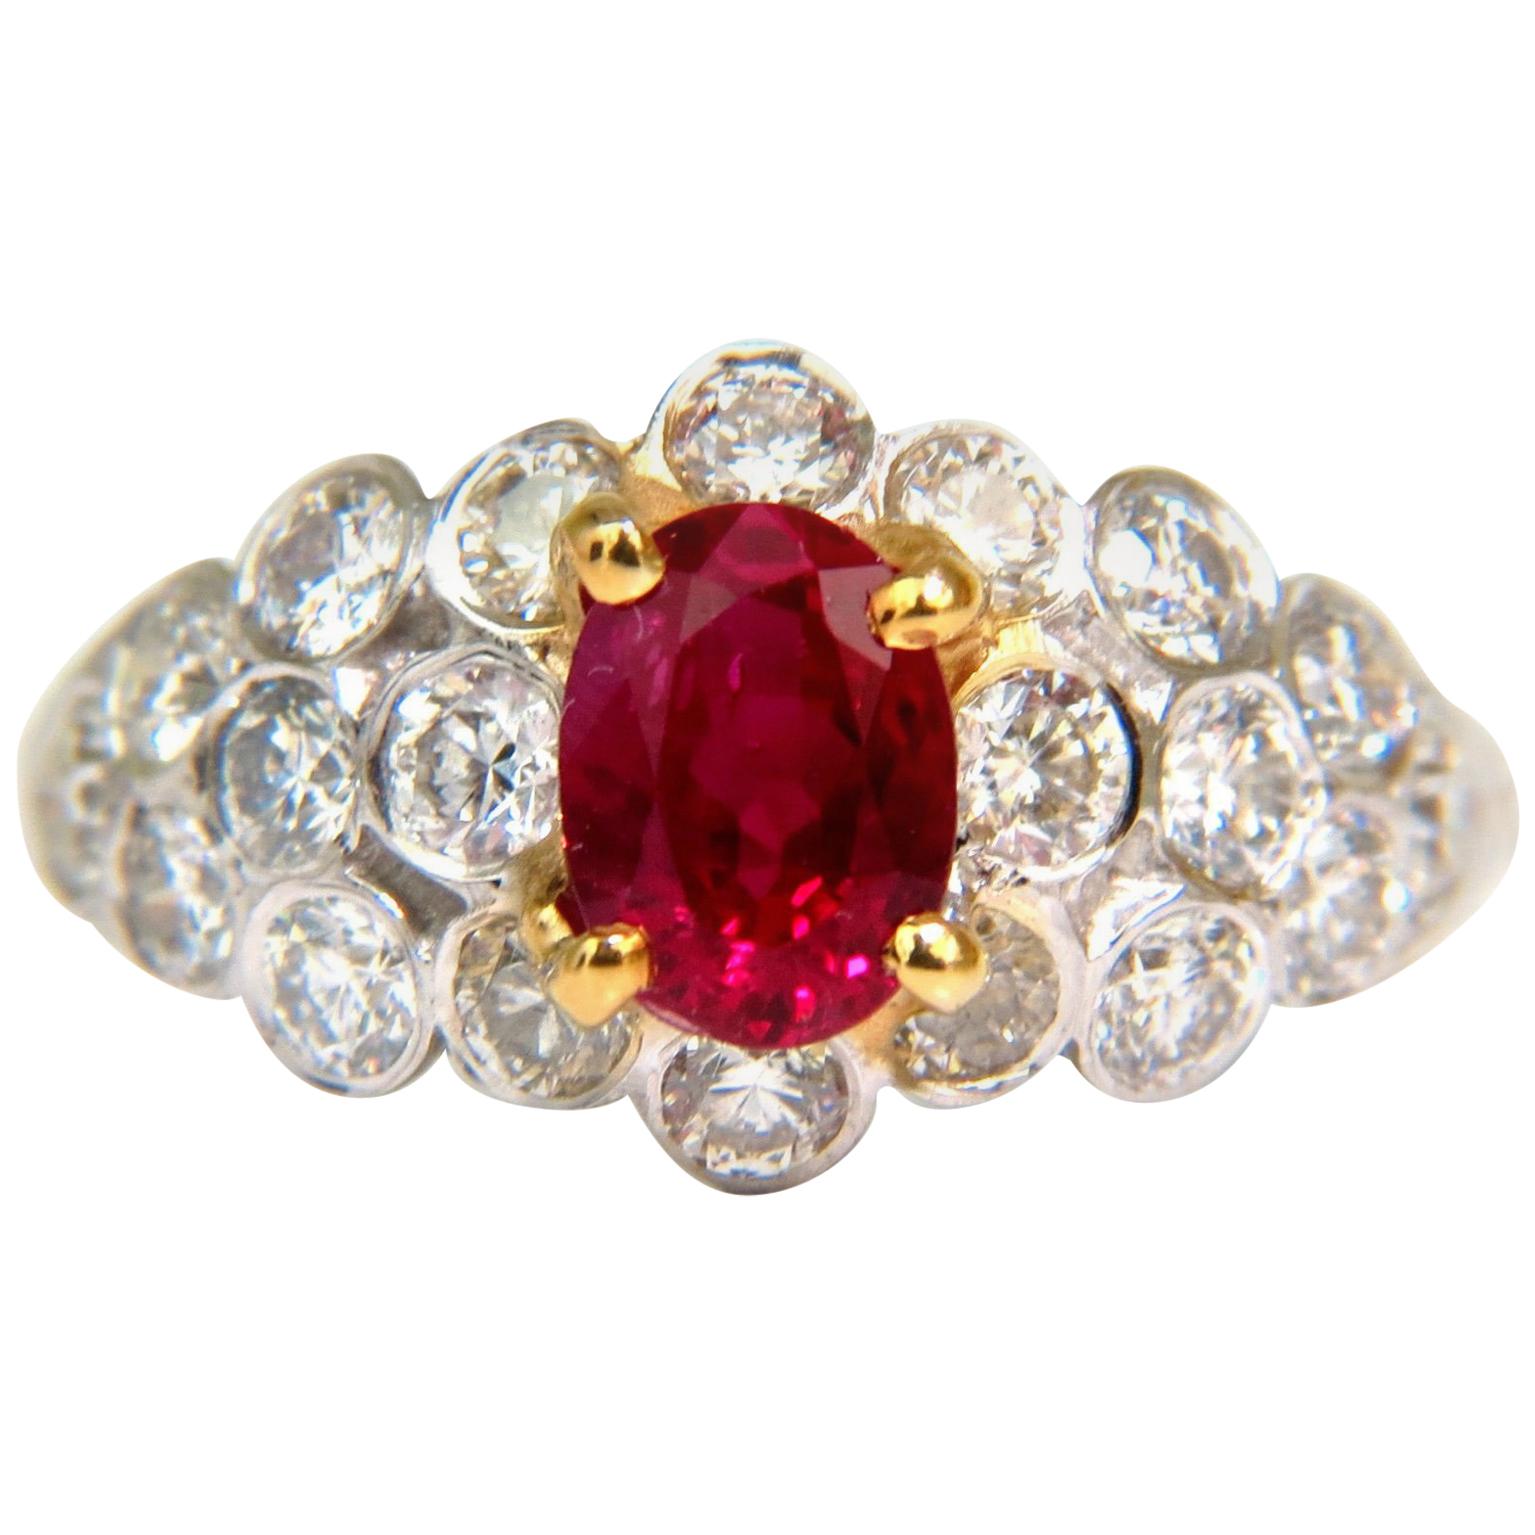 1.96 Carat Vivid Top Gem Natural Bright Red Ruby Diamond Ring 14 Karat